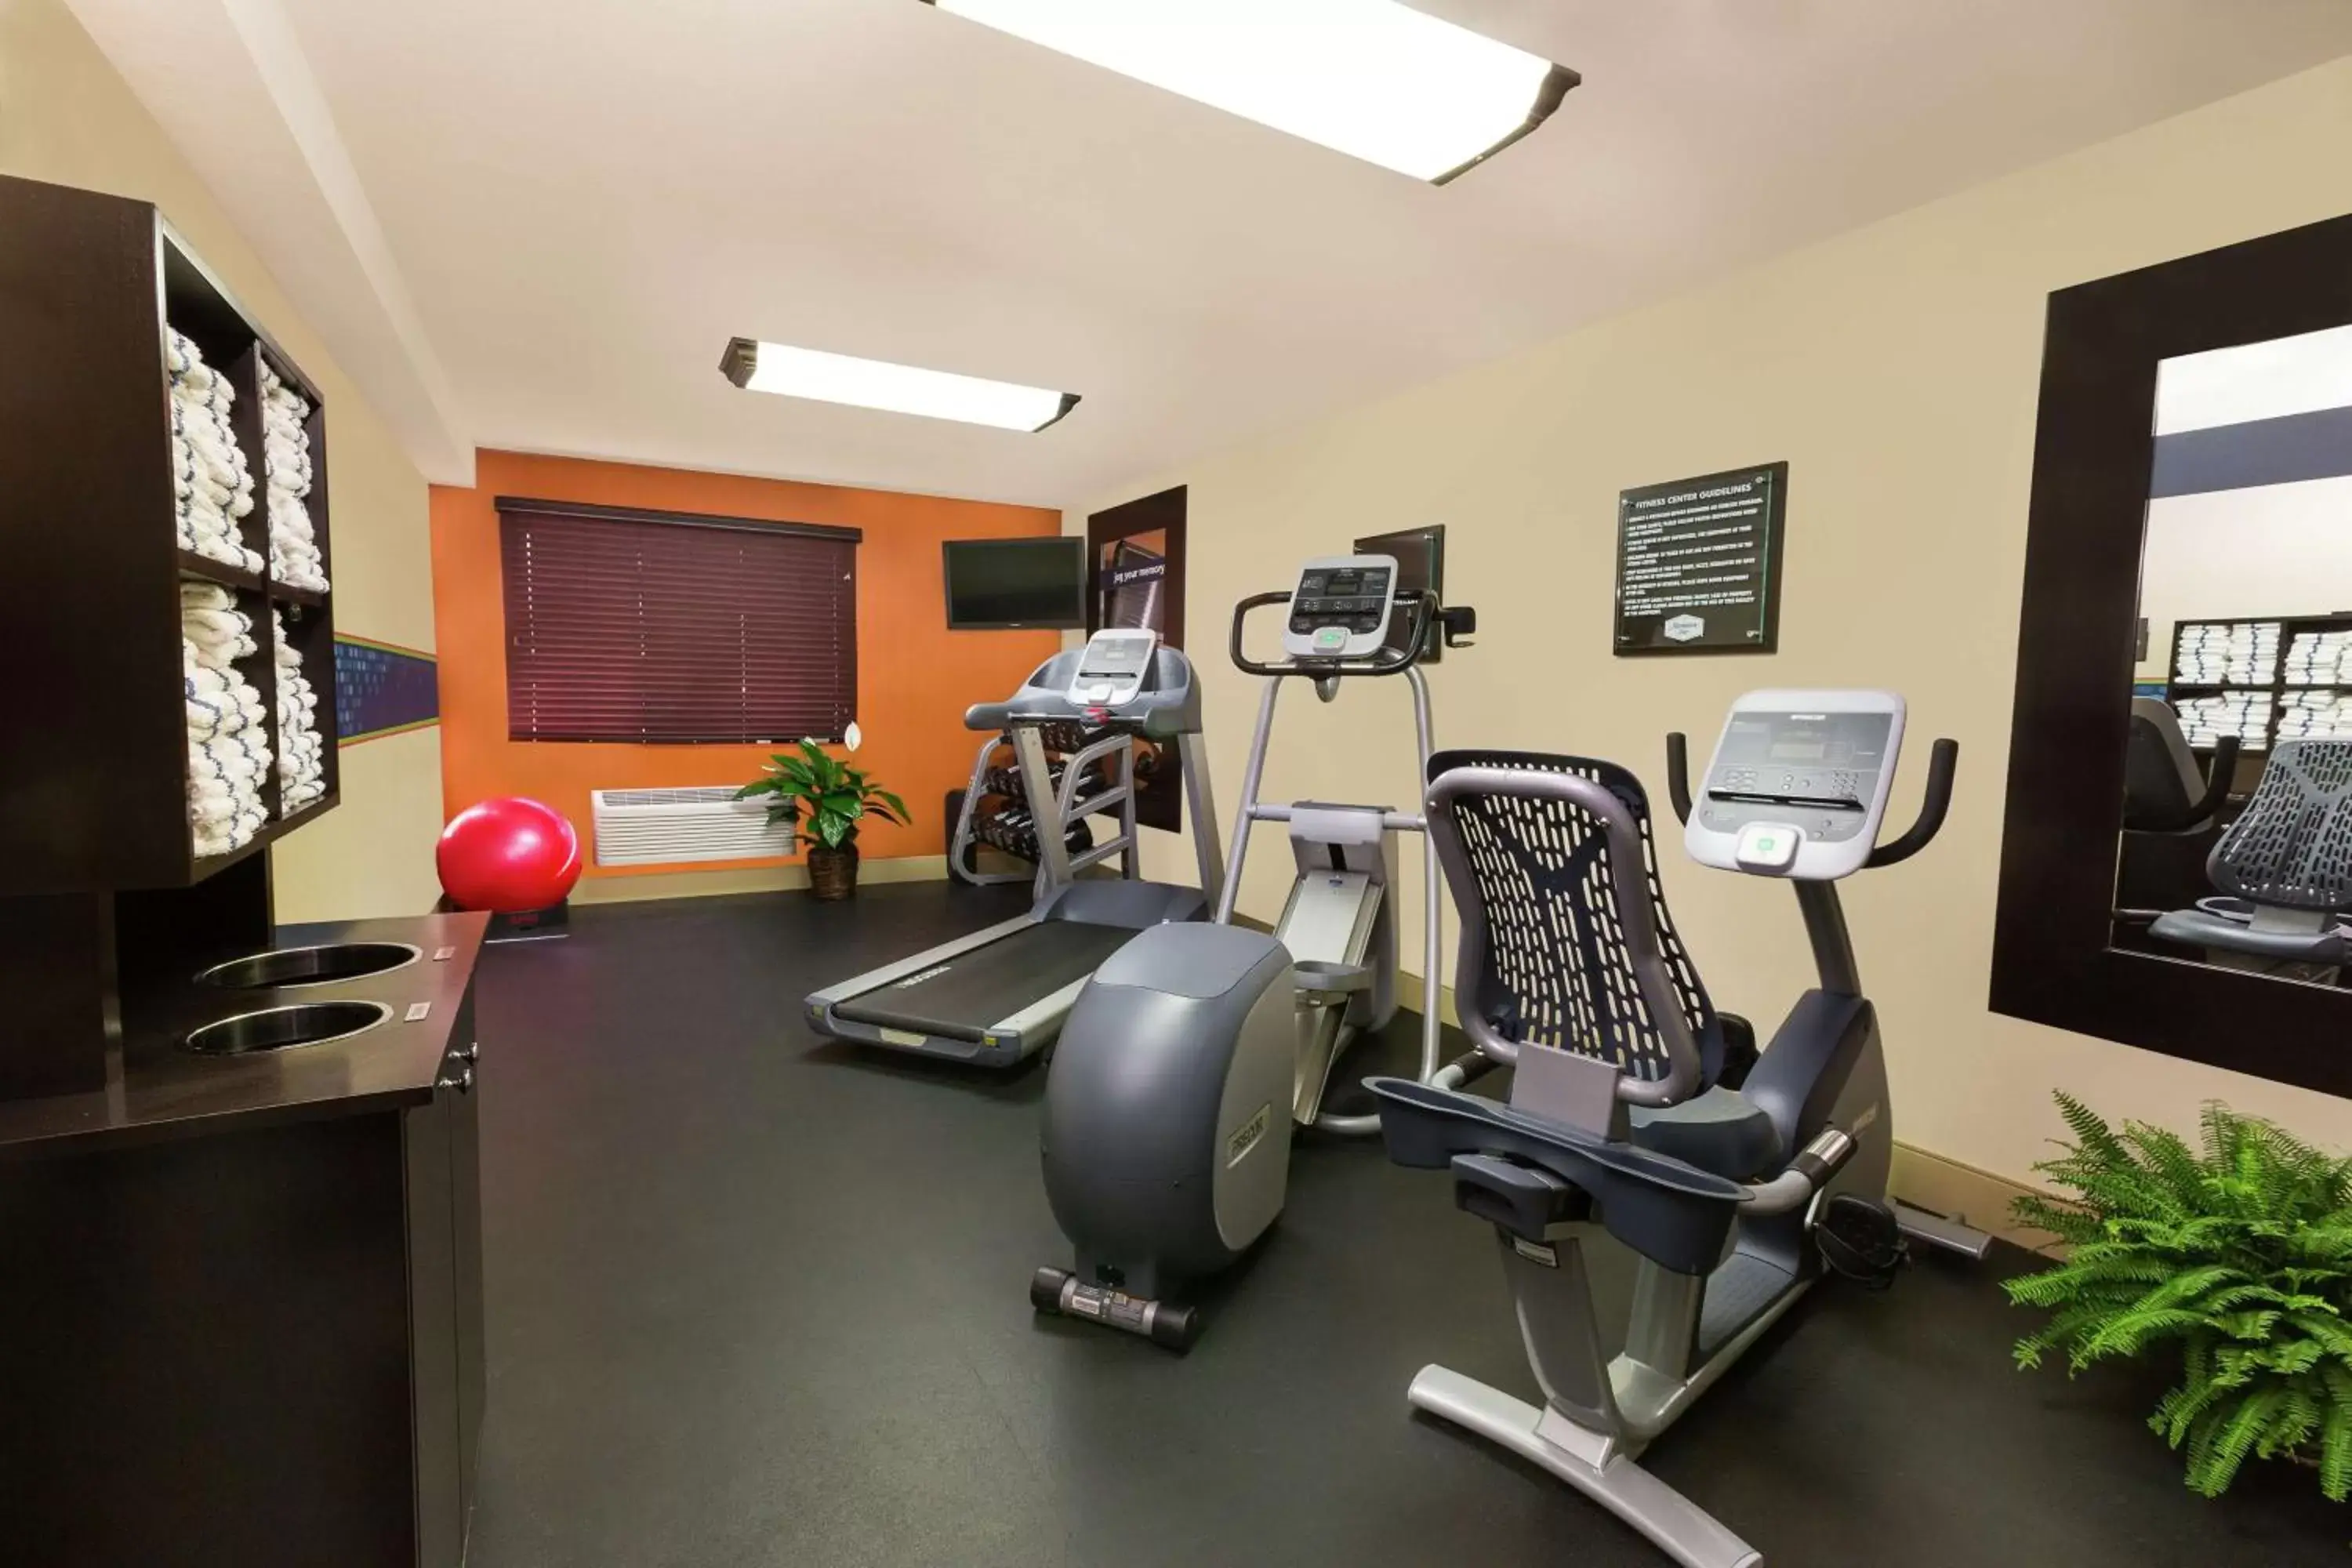 Fitness centre/facilities, Fitness Center/Facilities in Hampton Inn Jackson Hole